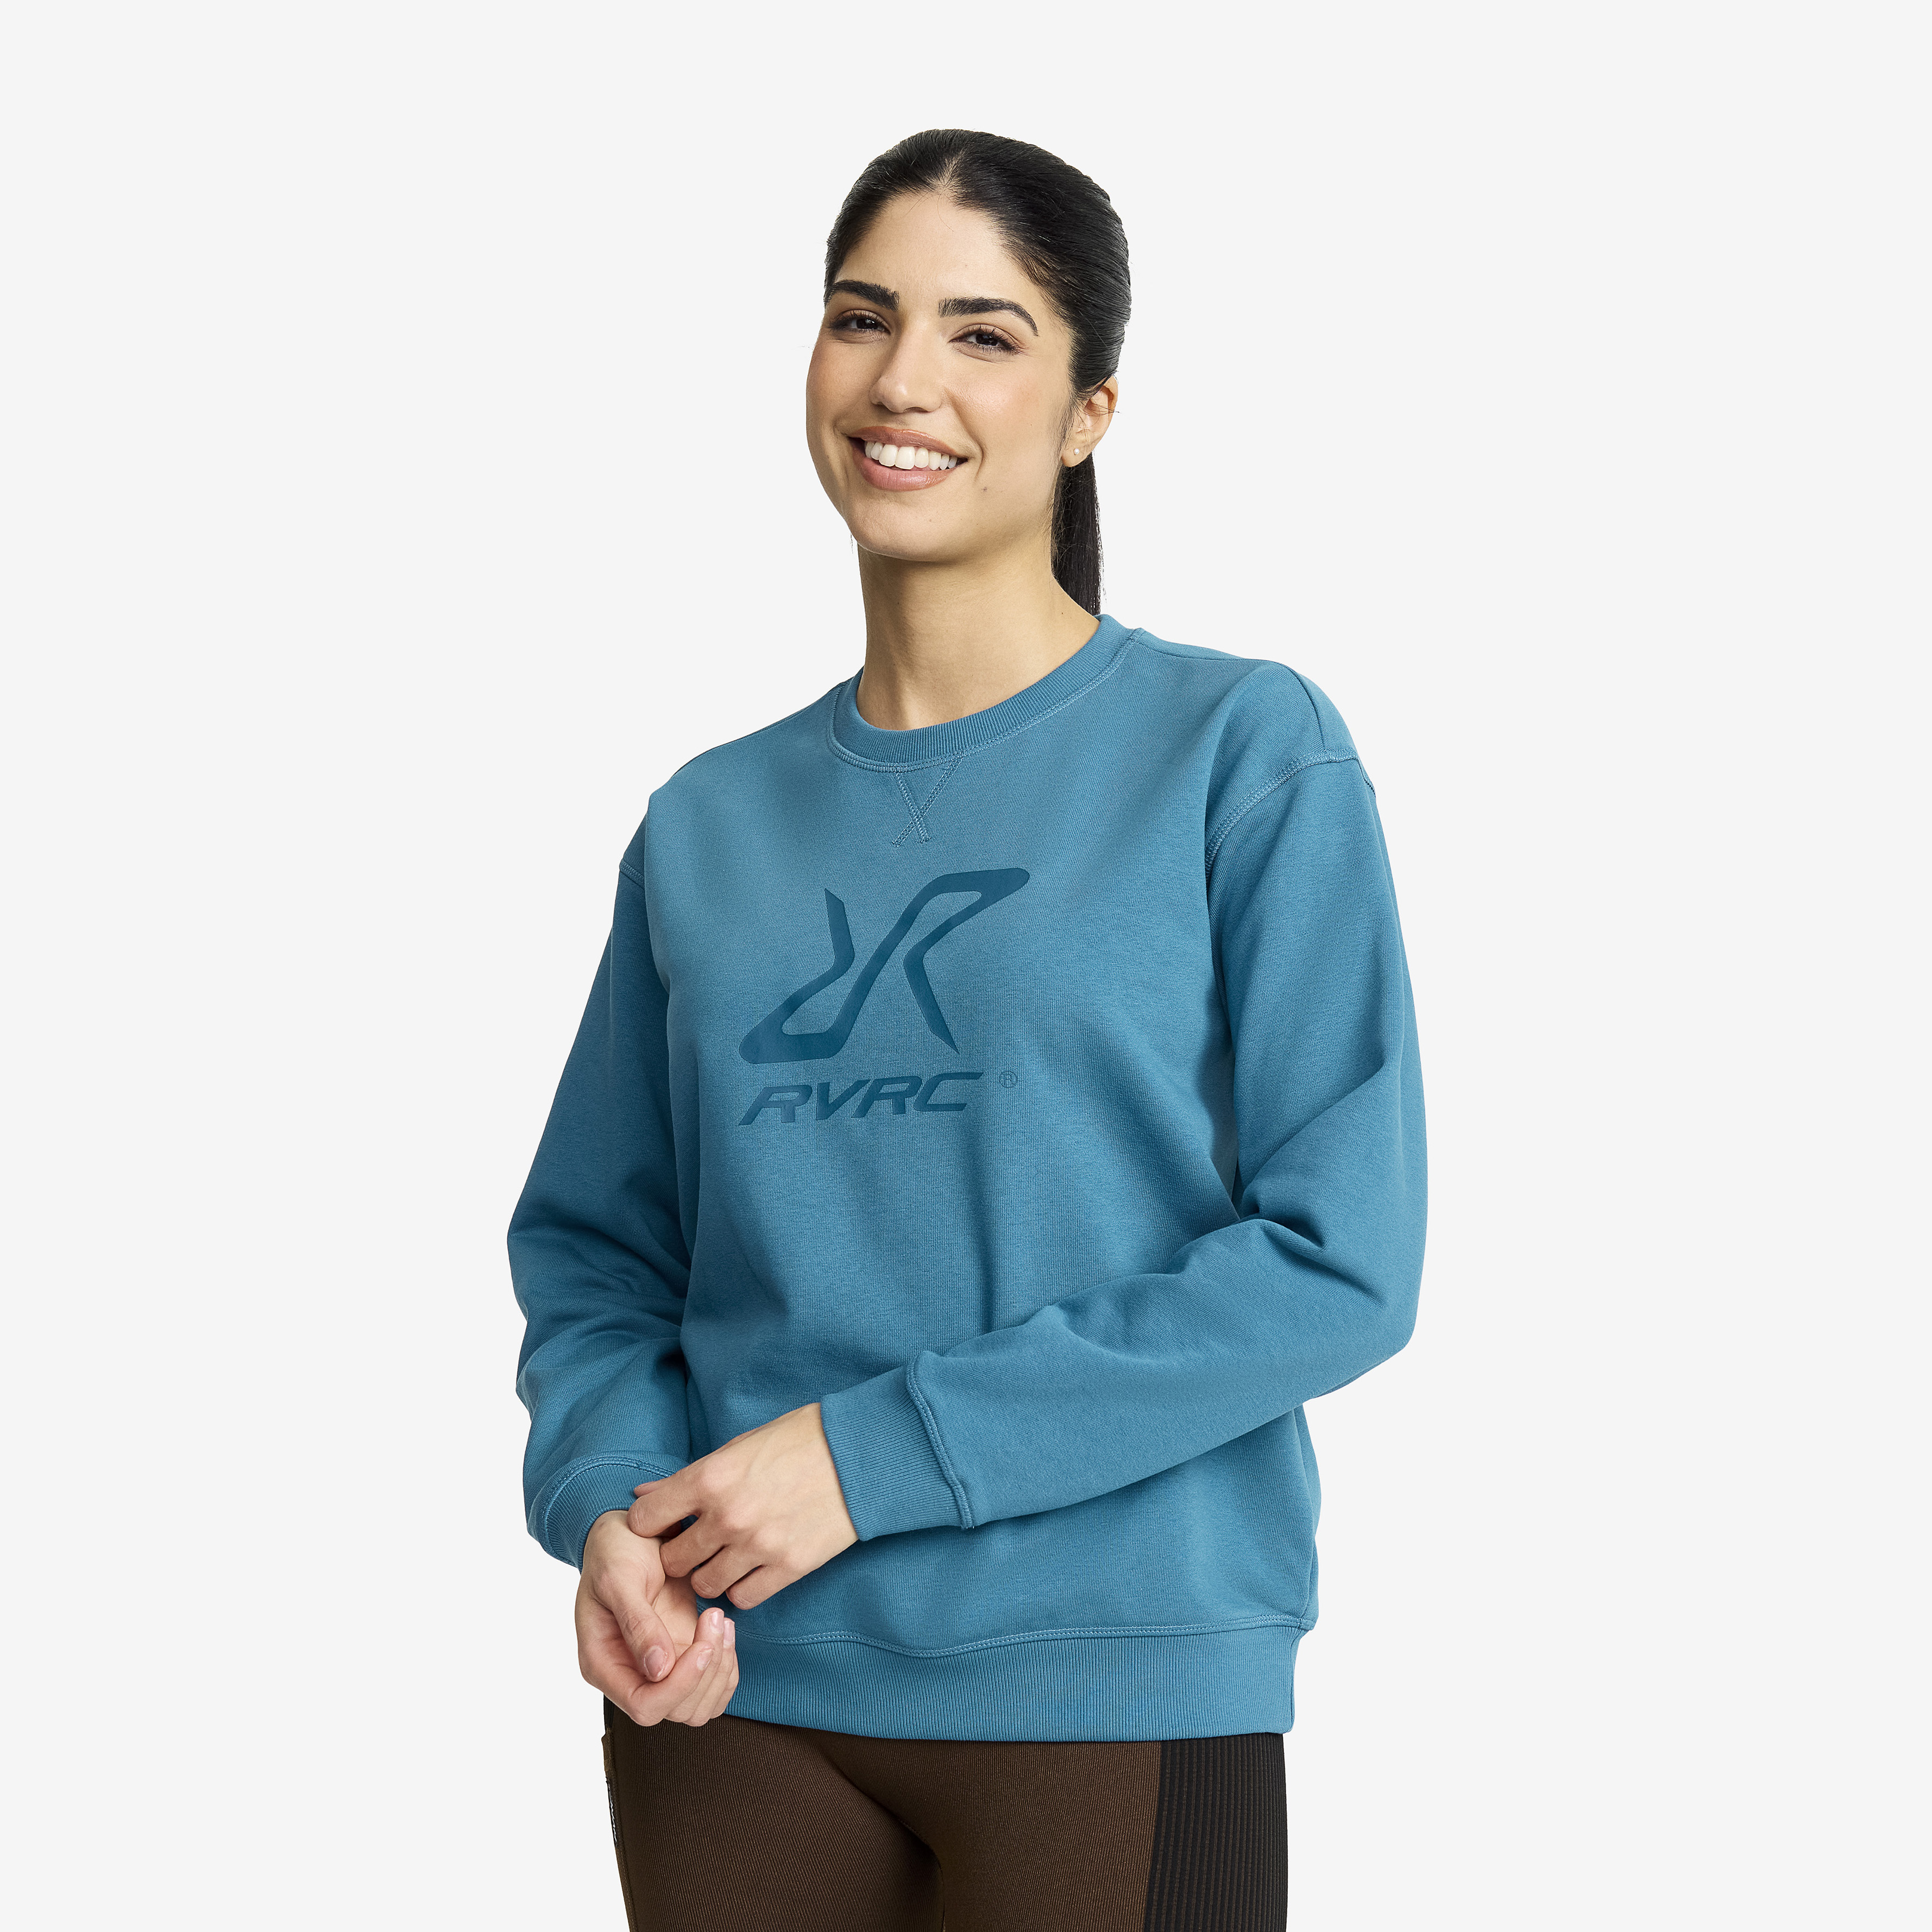 RVRC Sweatshirt Saxony Blue Mujeres